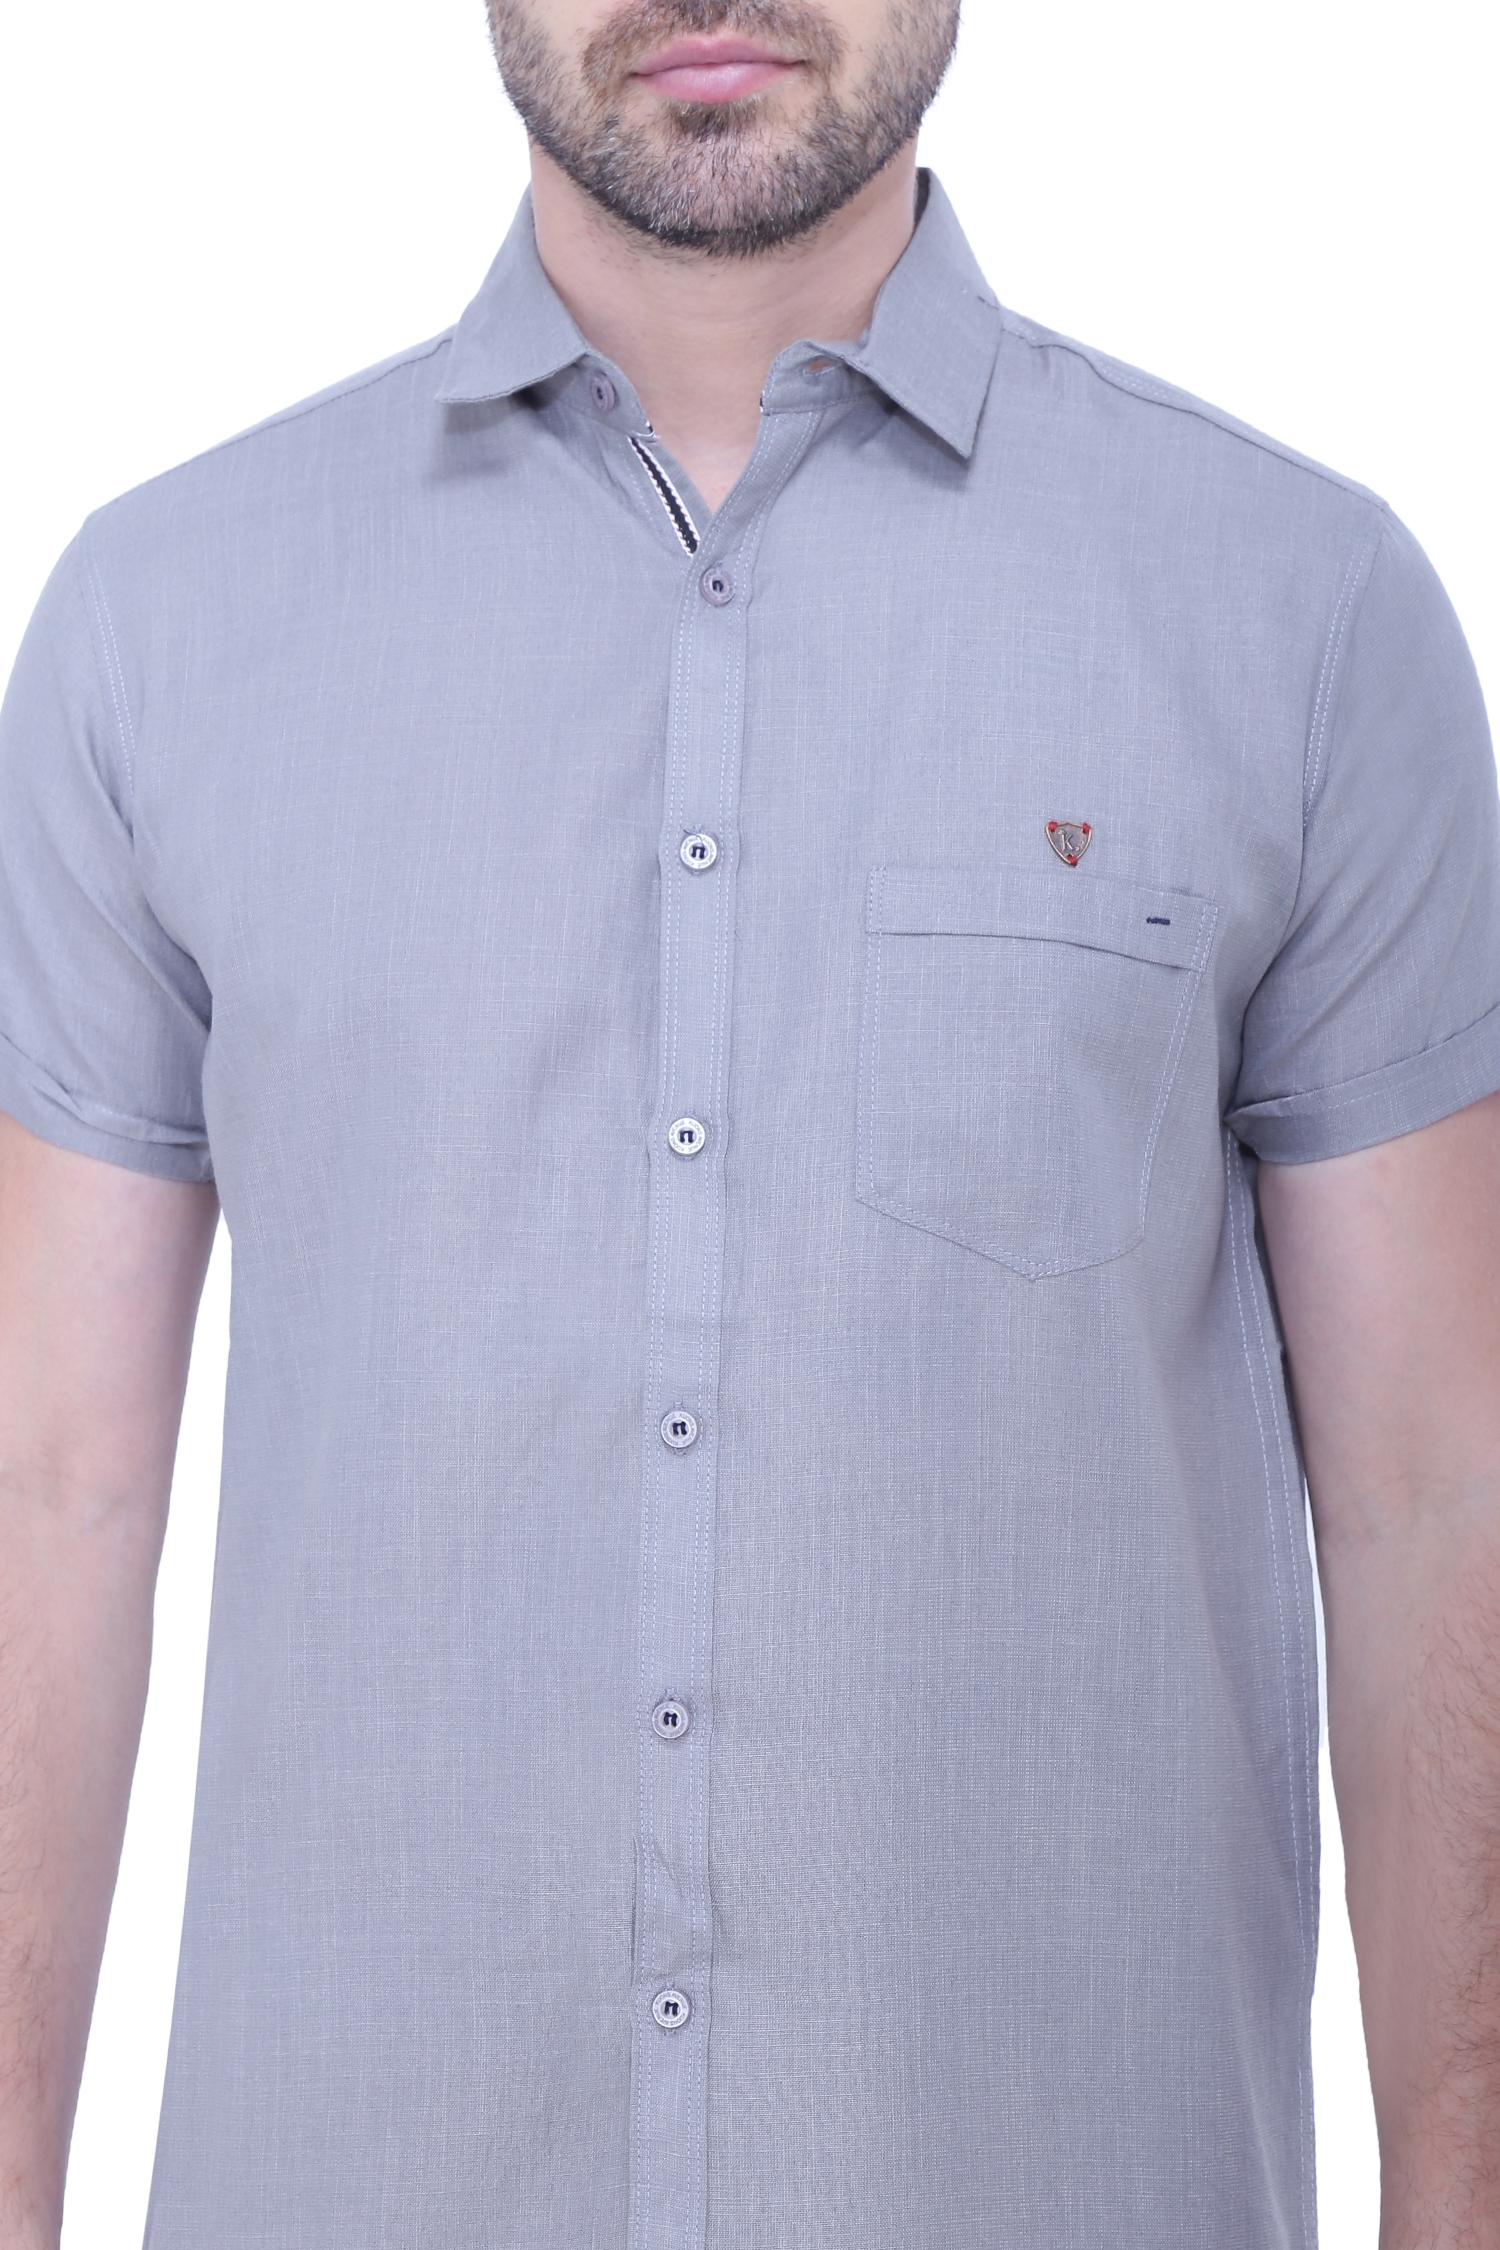 Kuons Avenue | Kuons Avenue Men's Linen Blend Half Sleeves Casual Shirt-KACLHS1236 3